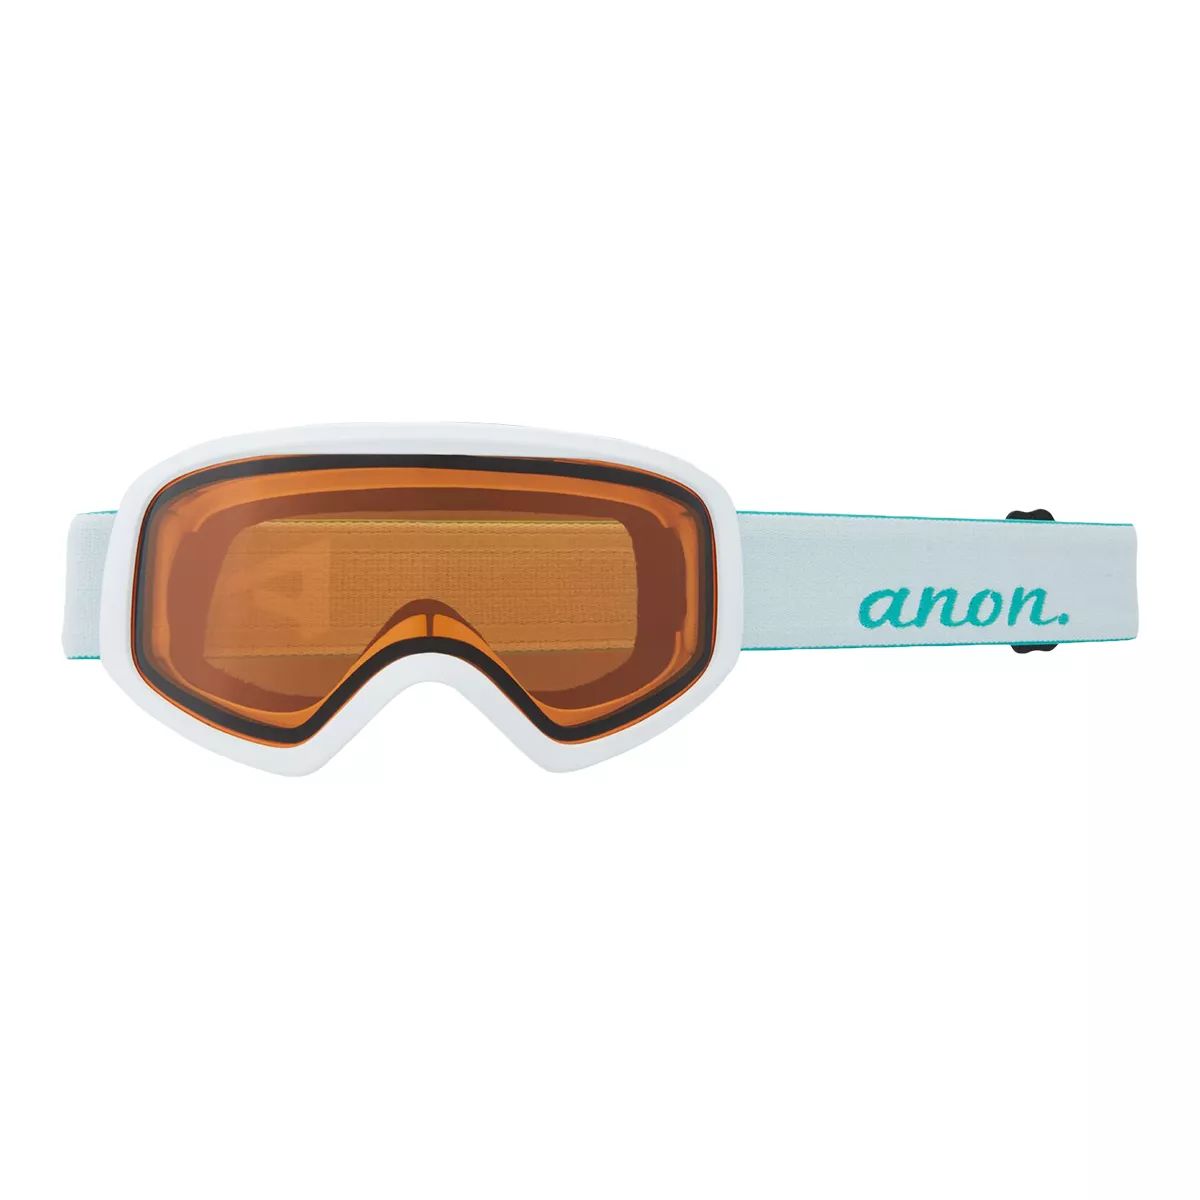 Anon Insight Women's Ski & Snowboard Goggles 2020/21 with Perceive Variable Blue Lens + Bonus Lens